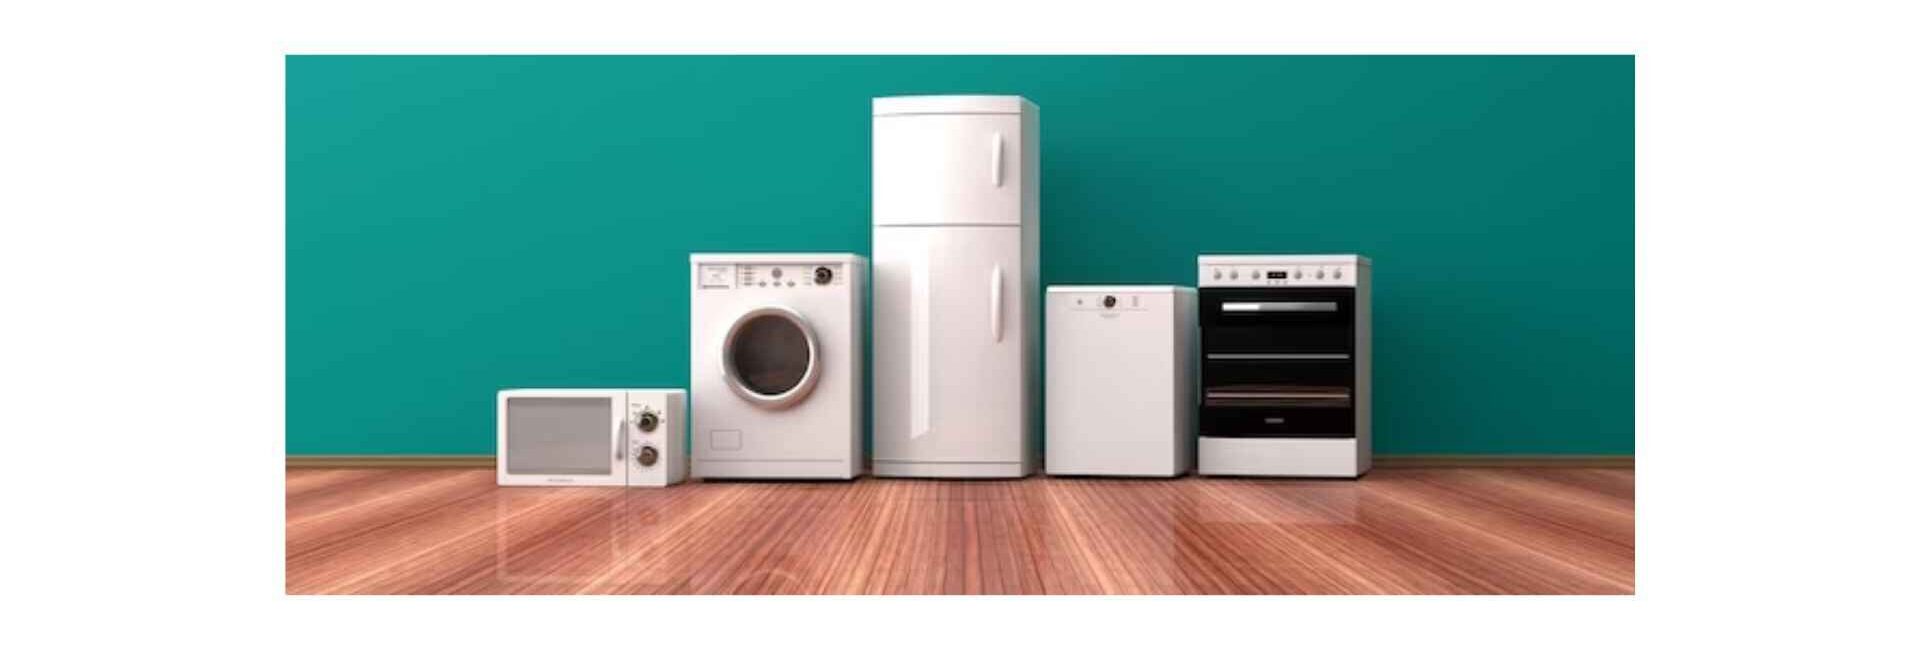 Vansh Electronics And Electrics - Home appliances in Noida